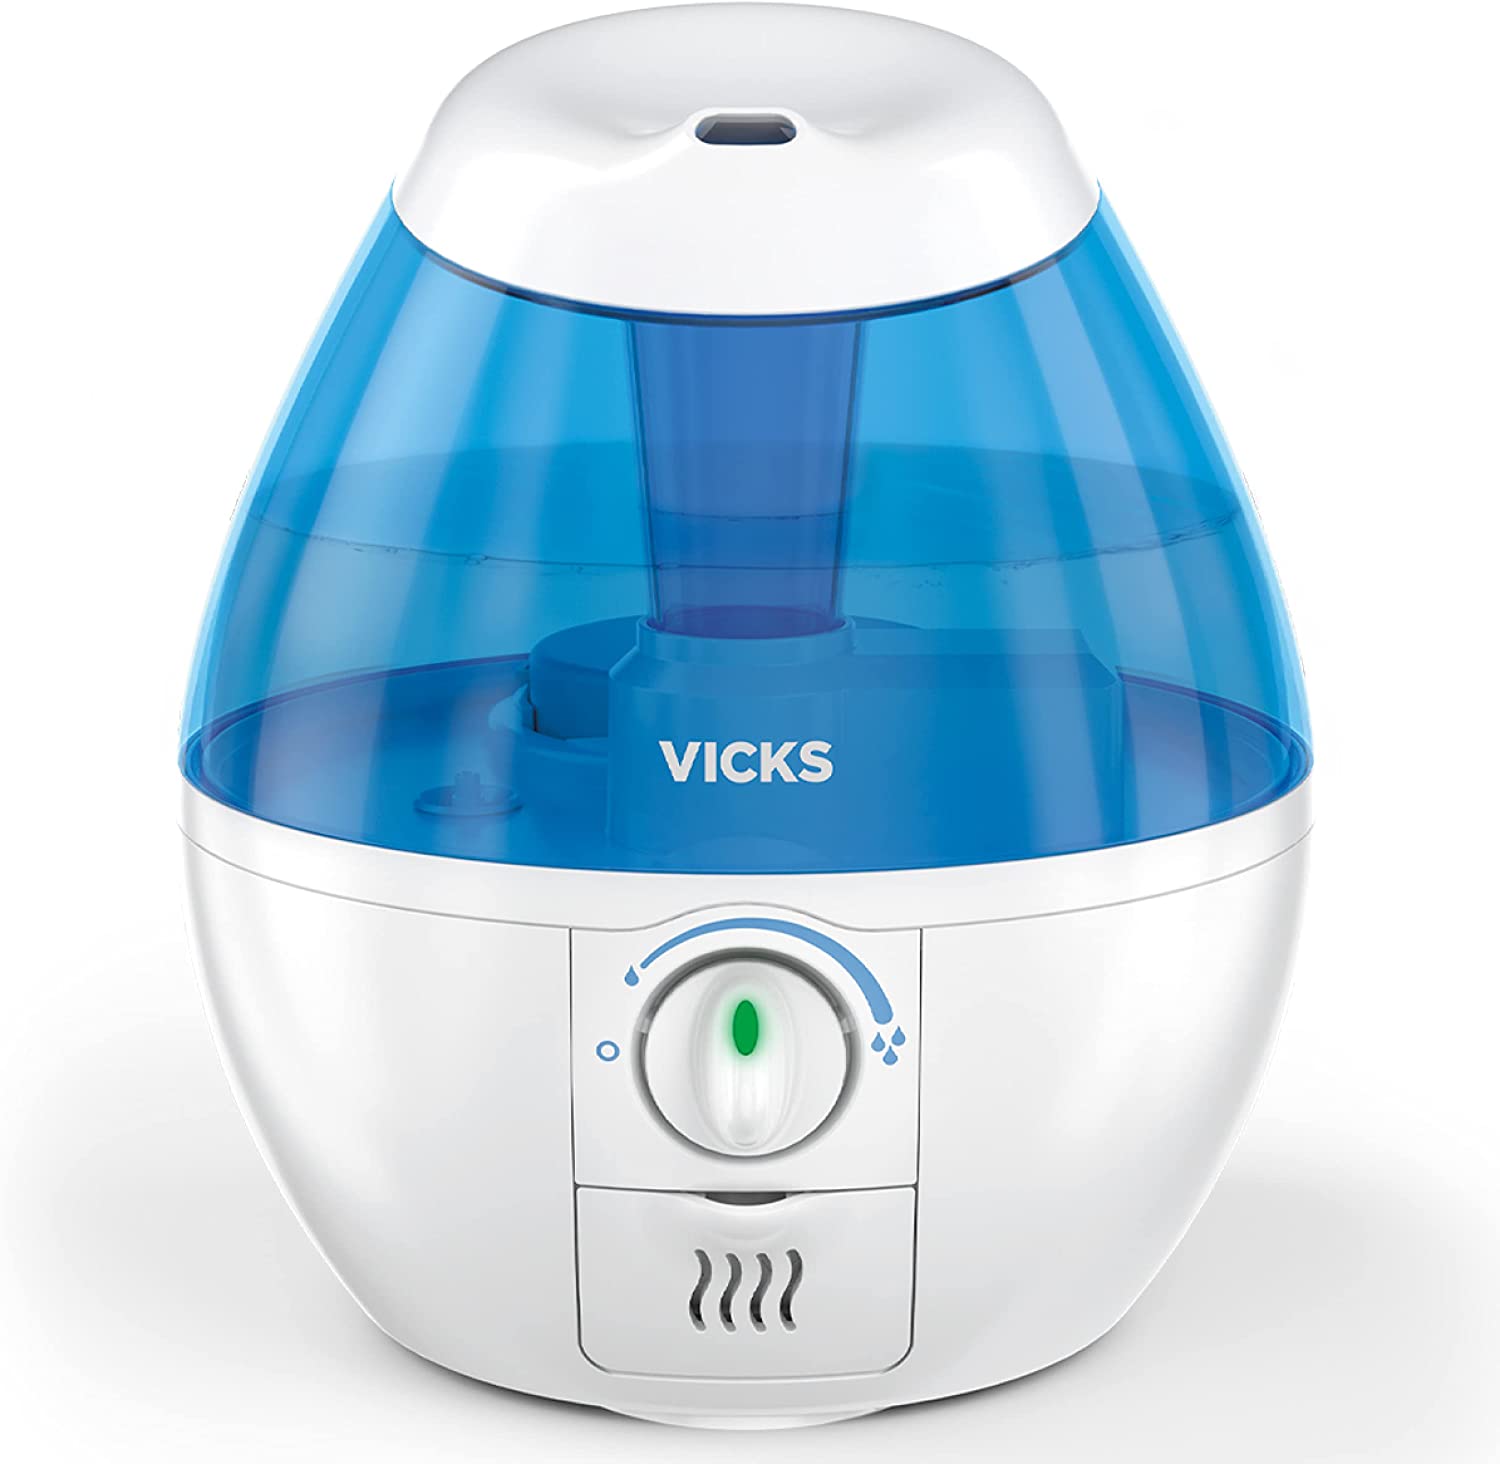 Vicks Mini Ultrasonic Room Humidifier Review